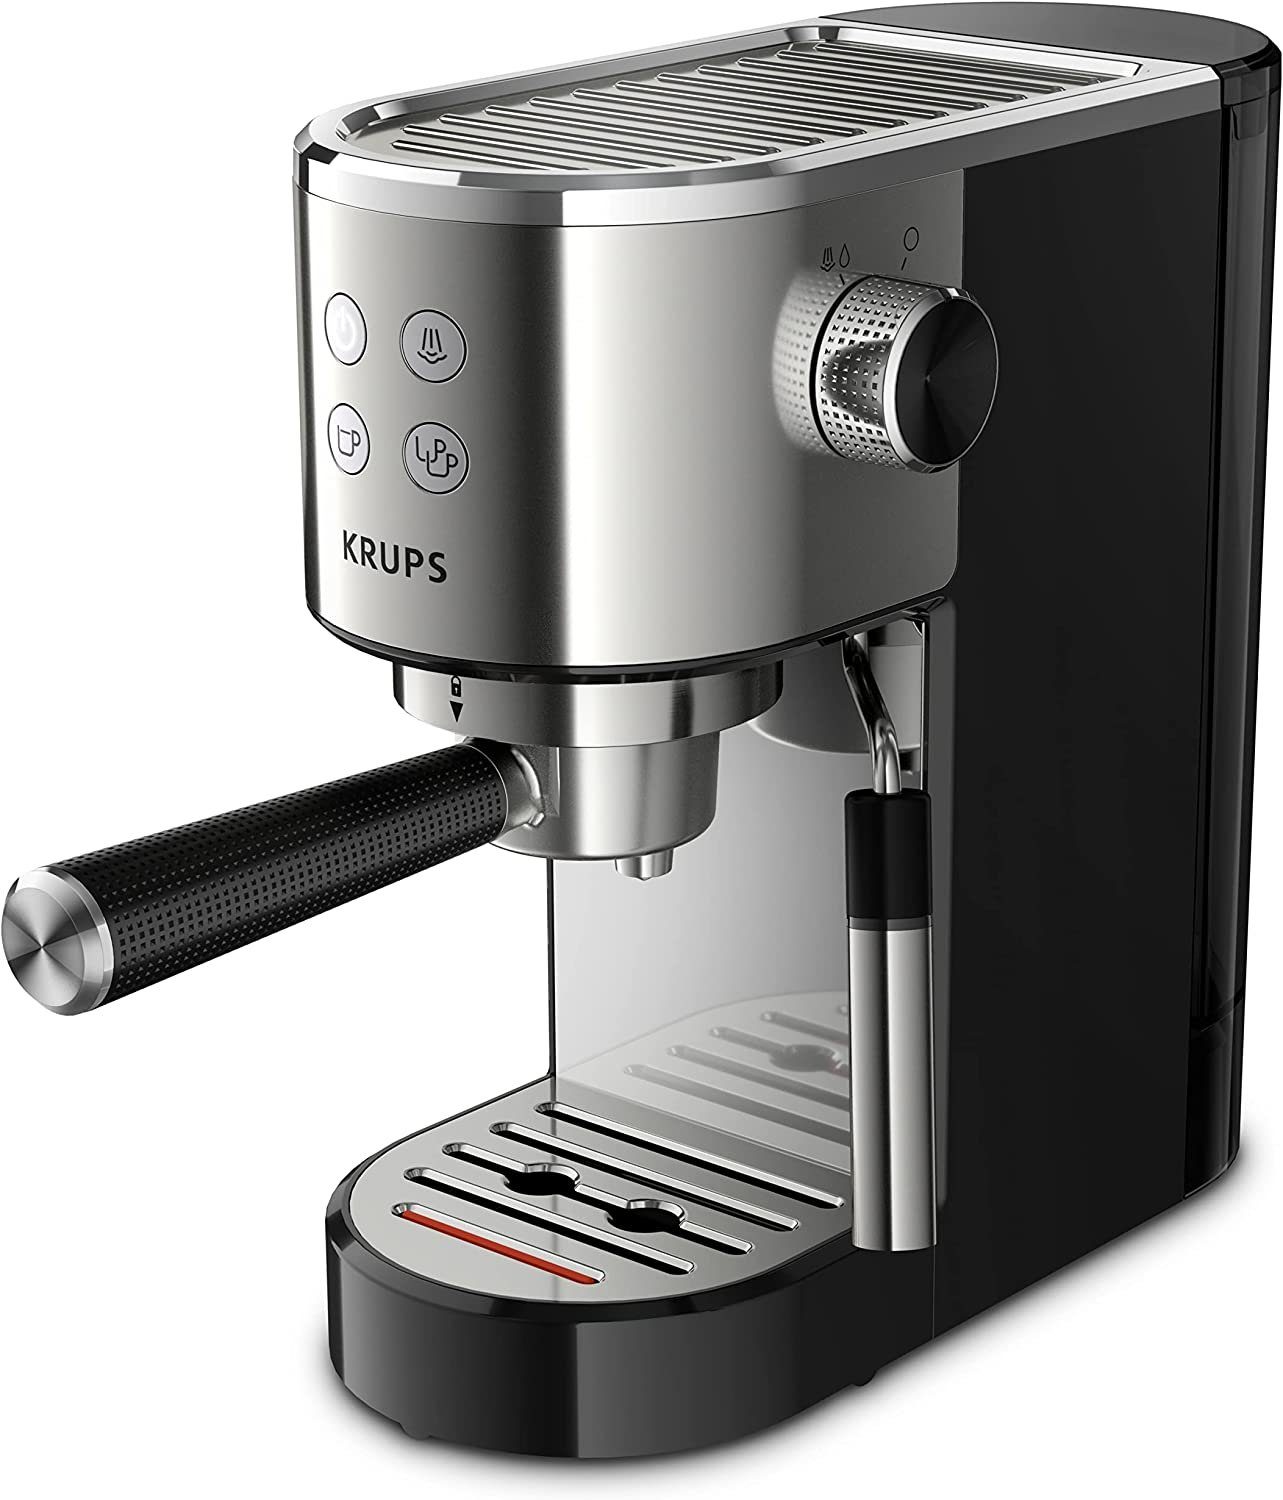 geeignet 15 1l Bar + Edelstahl, Kaffeepads Filtereinsatz automatischer XP442C, Kaffeekanne, ESE Tamper, Krups Espressomaschine Milchschaumdüse Abschaltung,